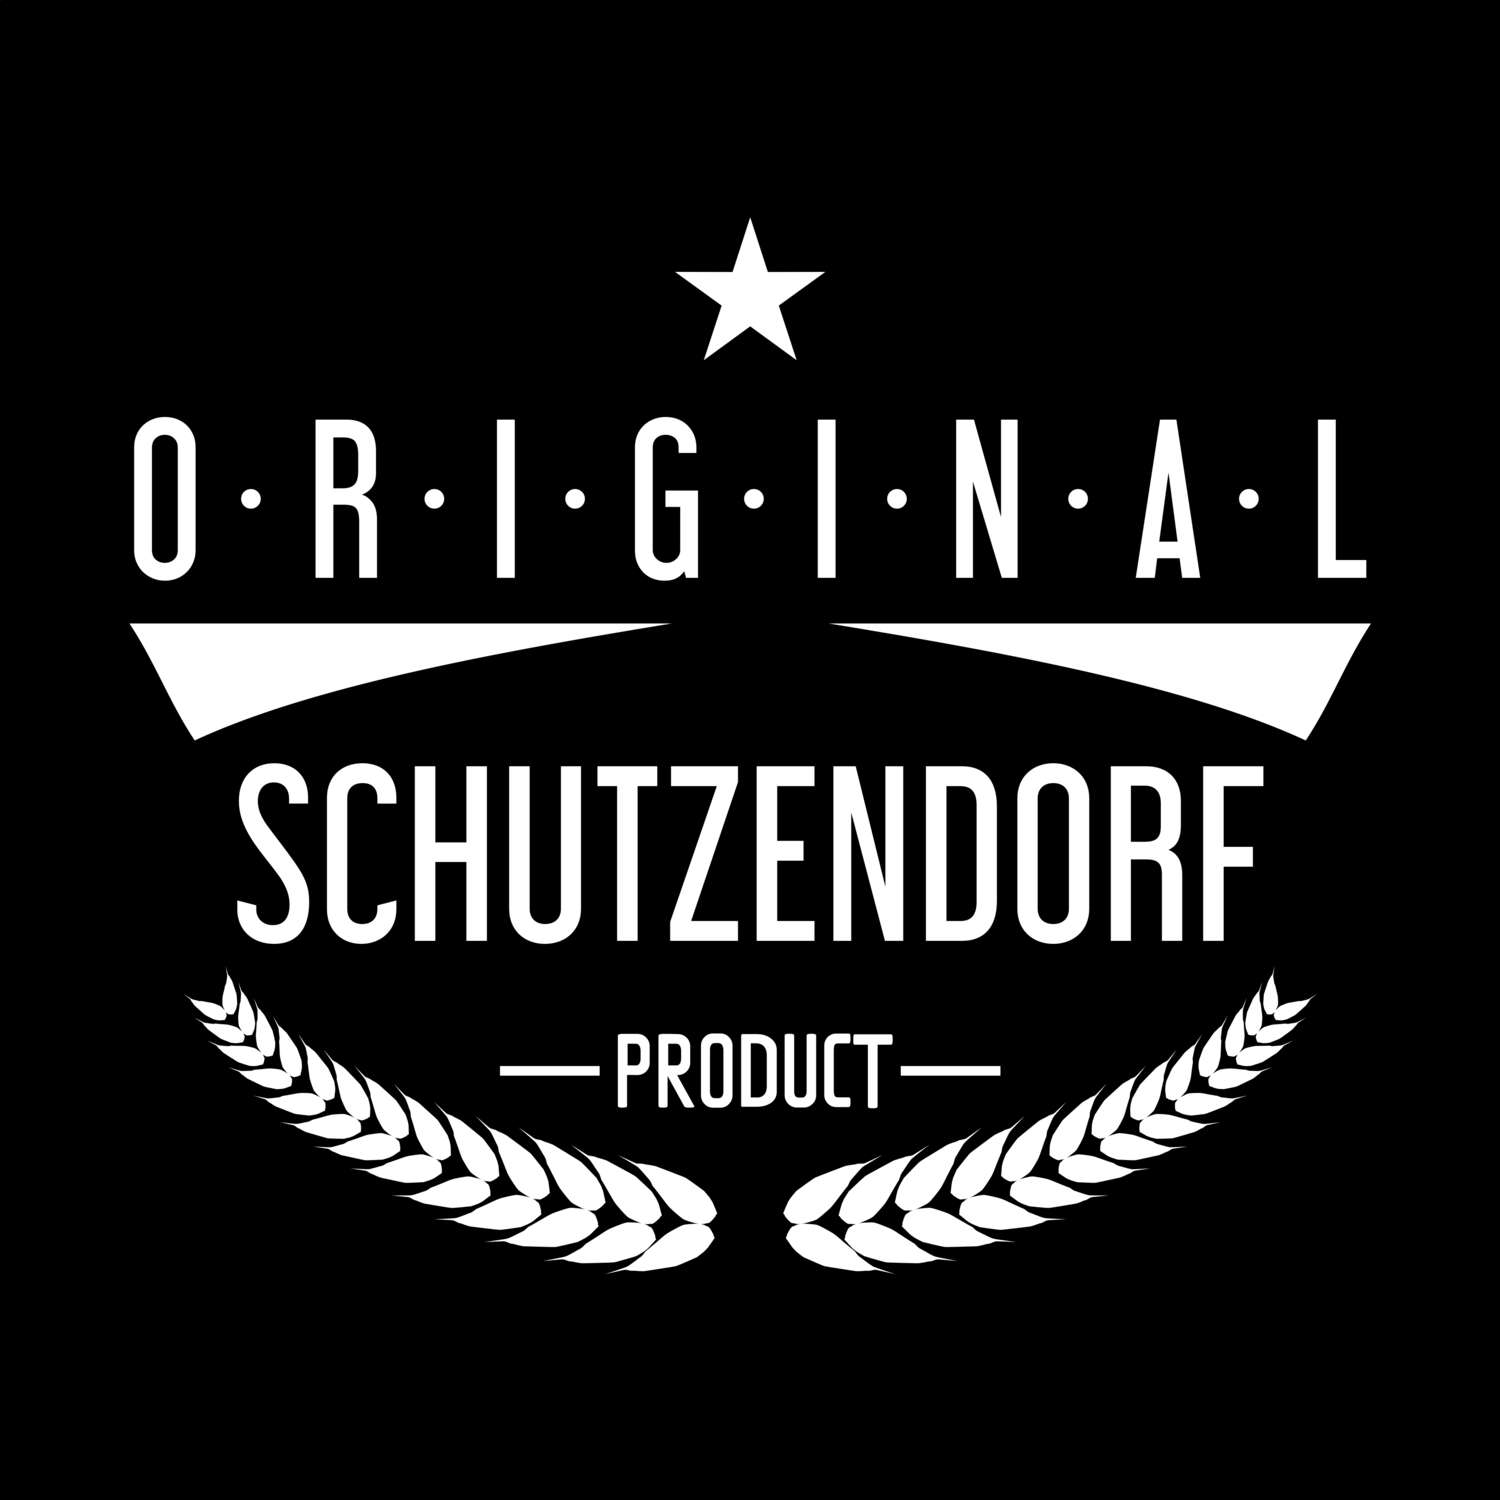 Schutzendorf T-Shirt »Original Product«